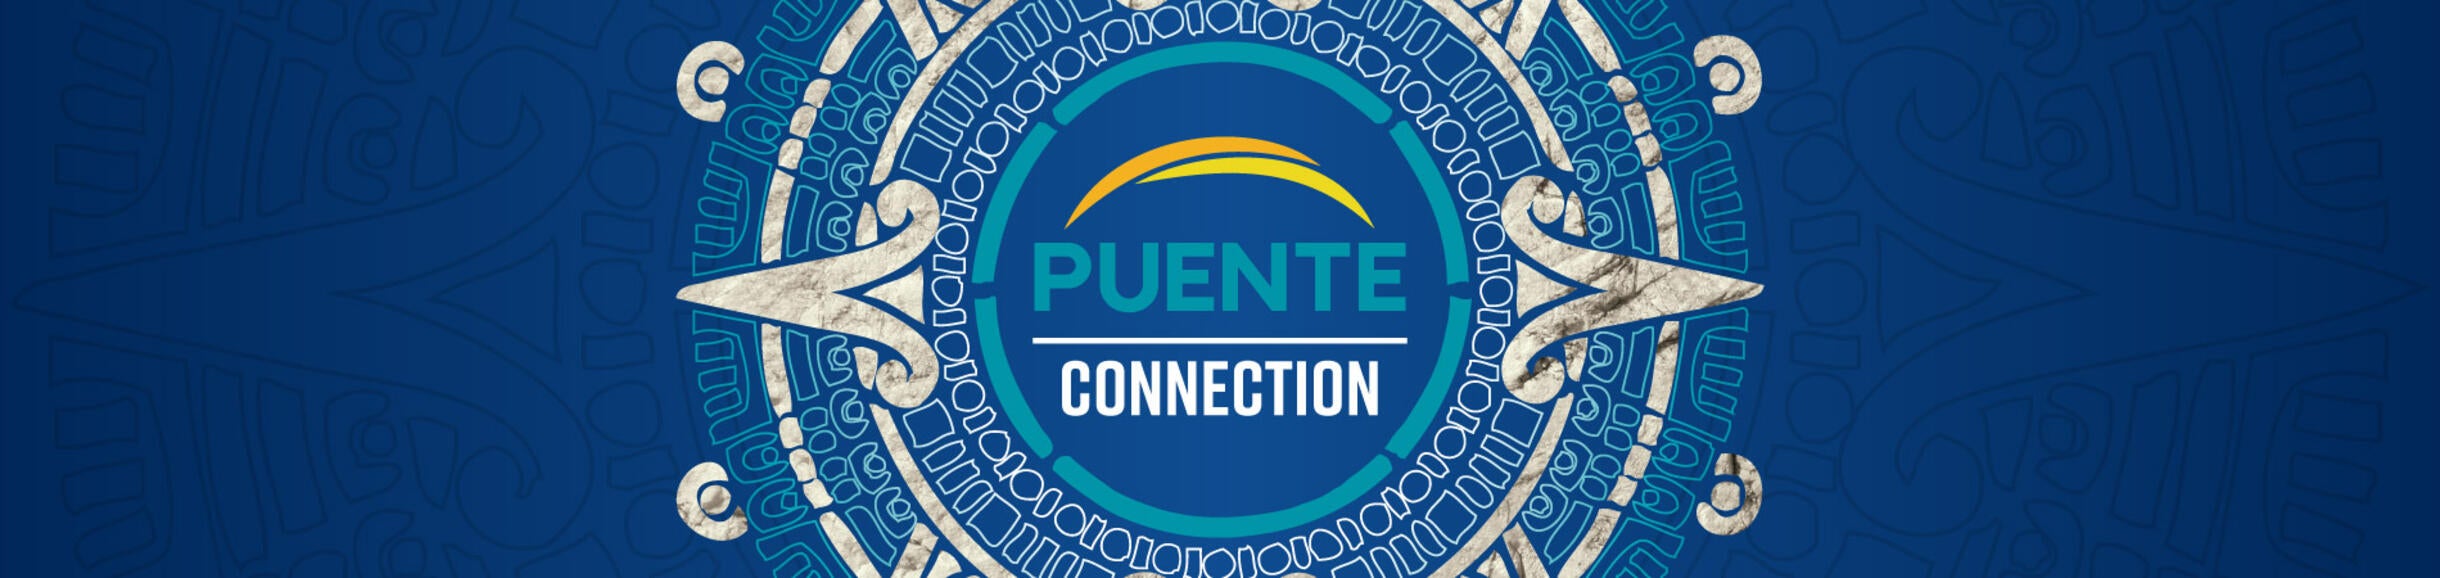 Puente Connection at UC Riverside